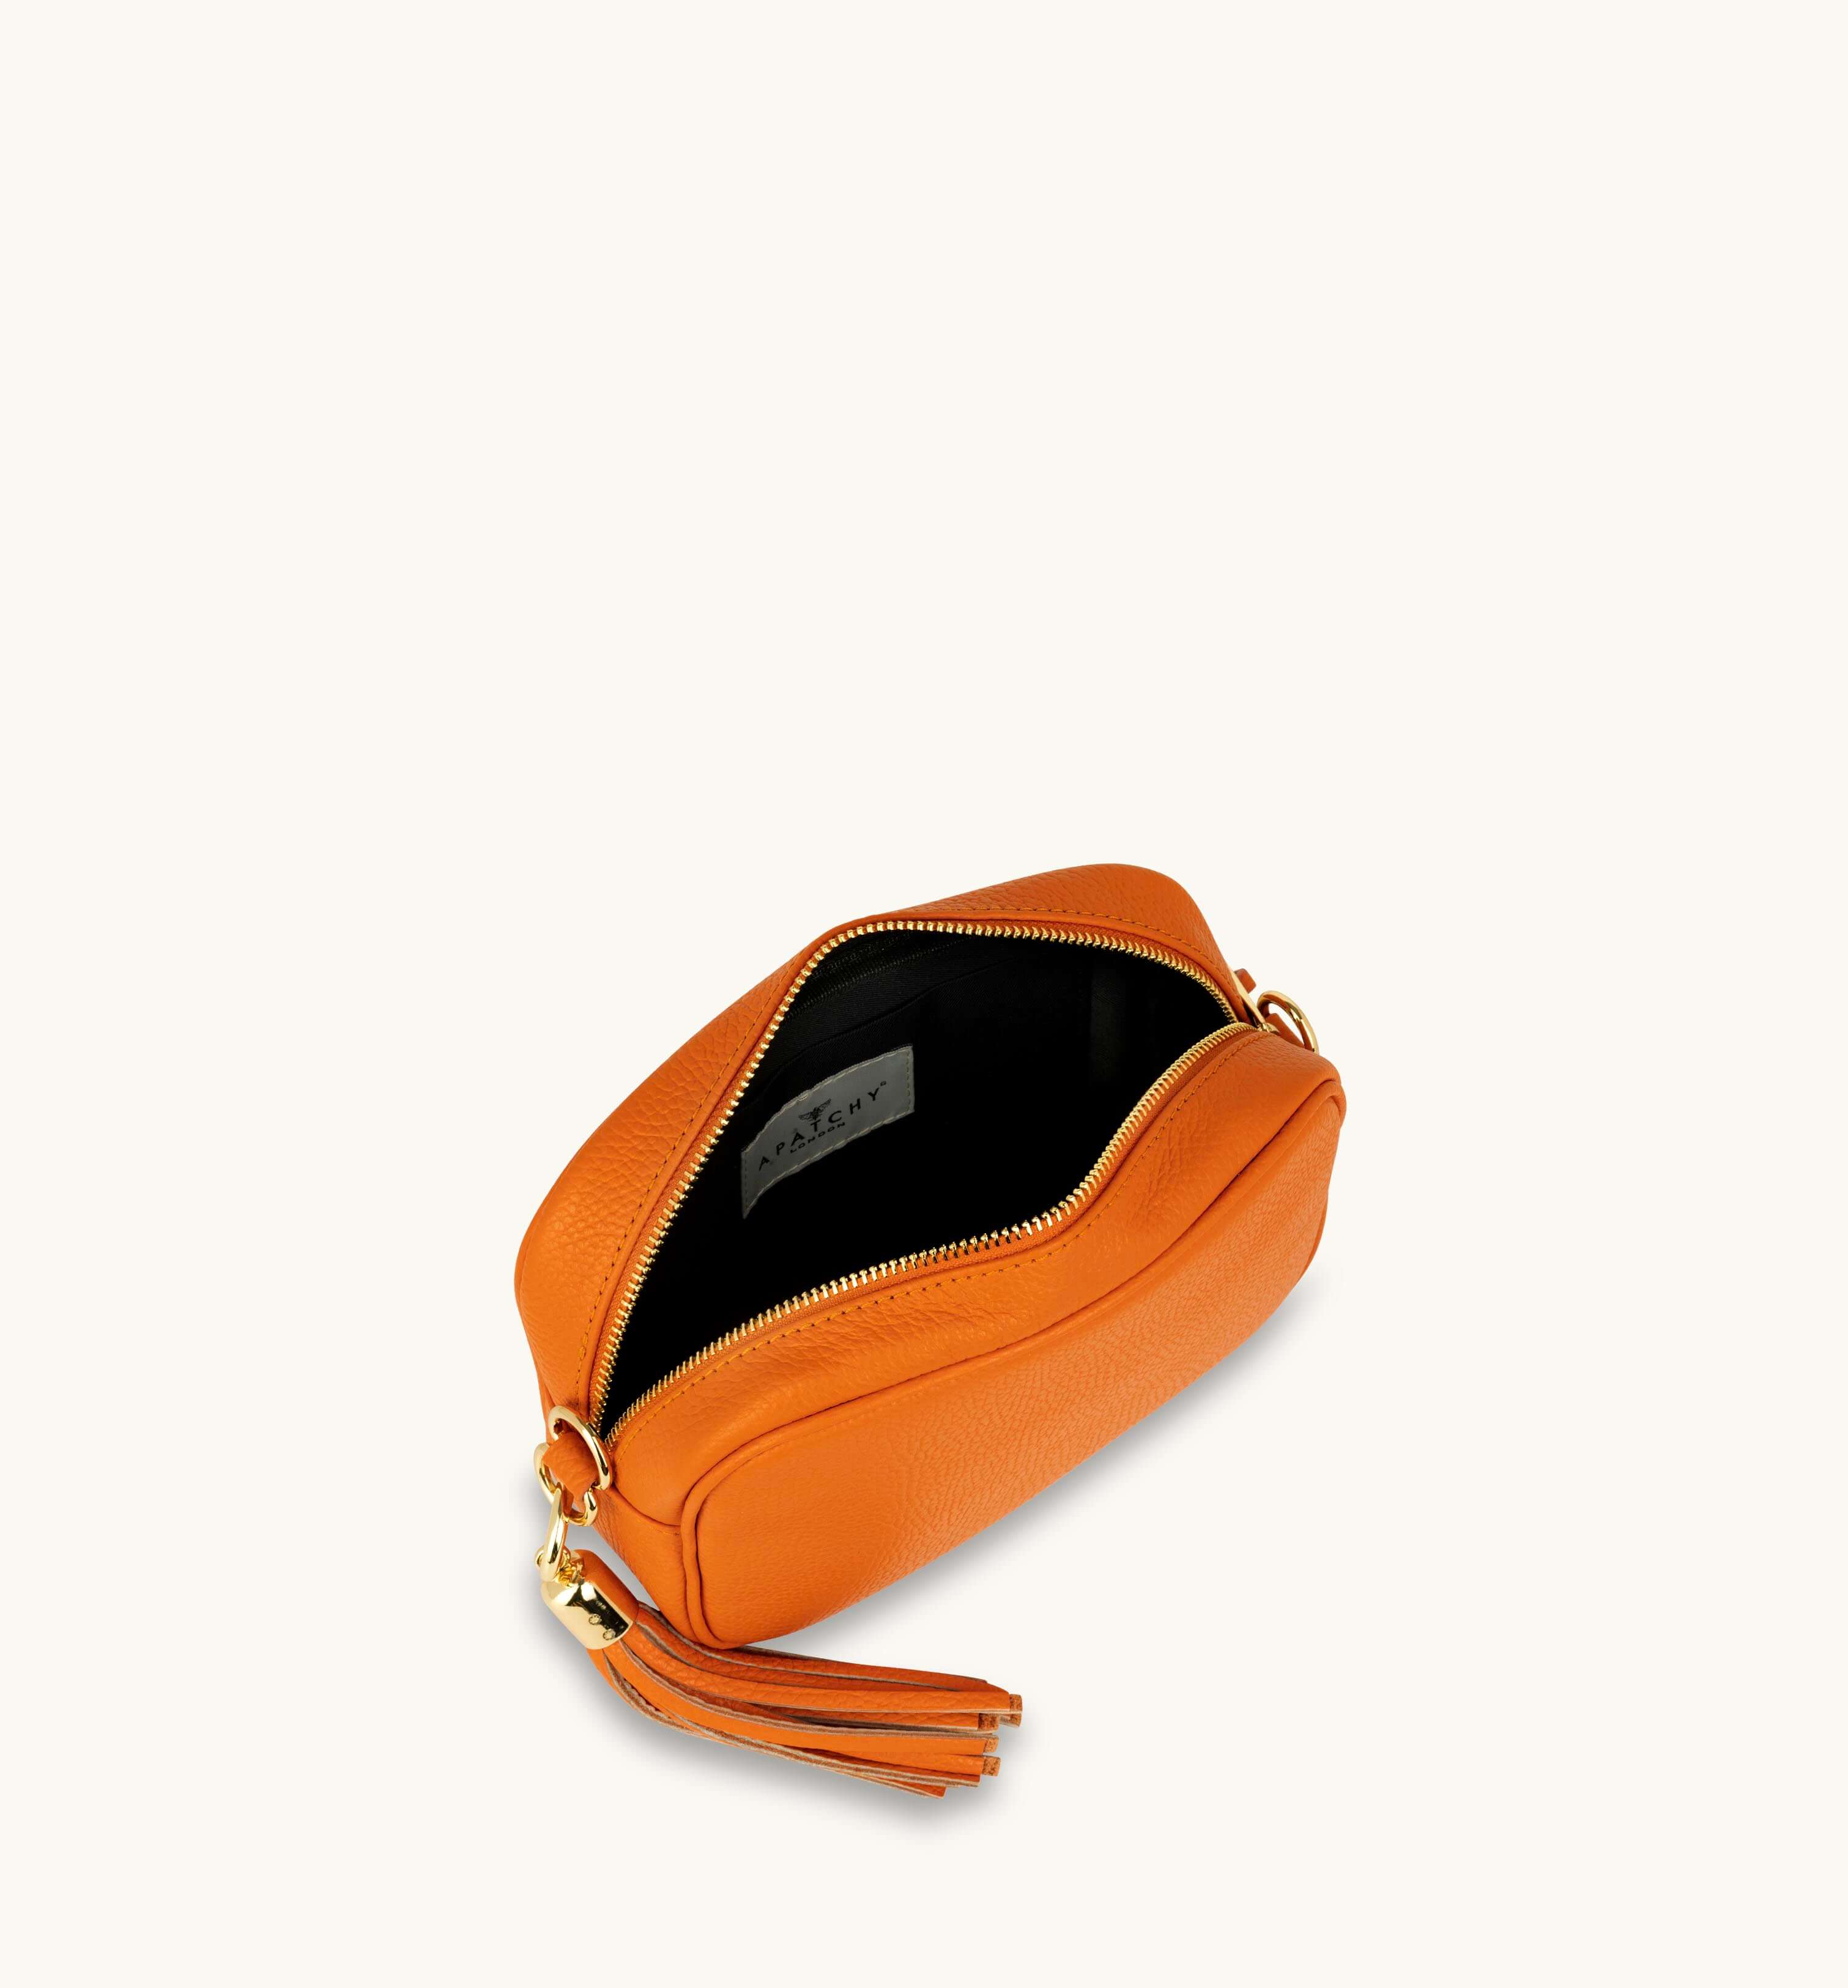 Orange Leather Crossbody Bag With Orange Cross-Stitch Strap